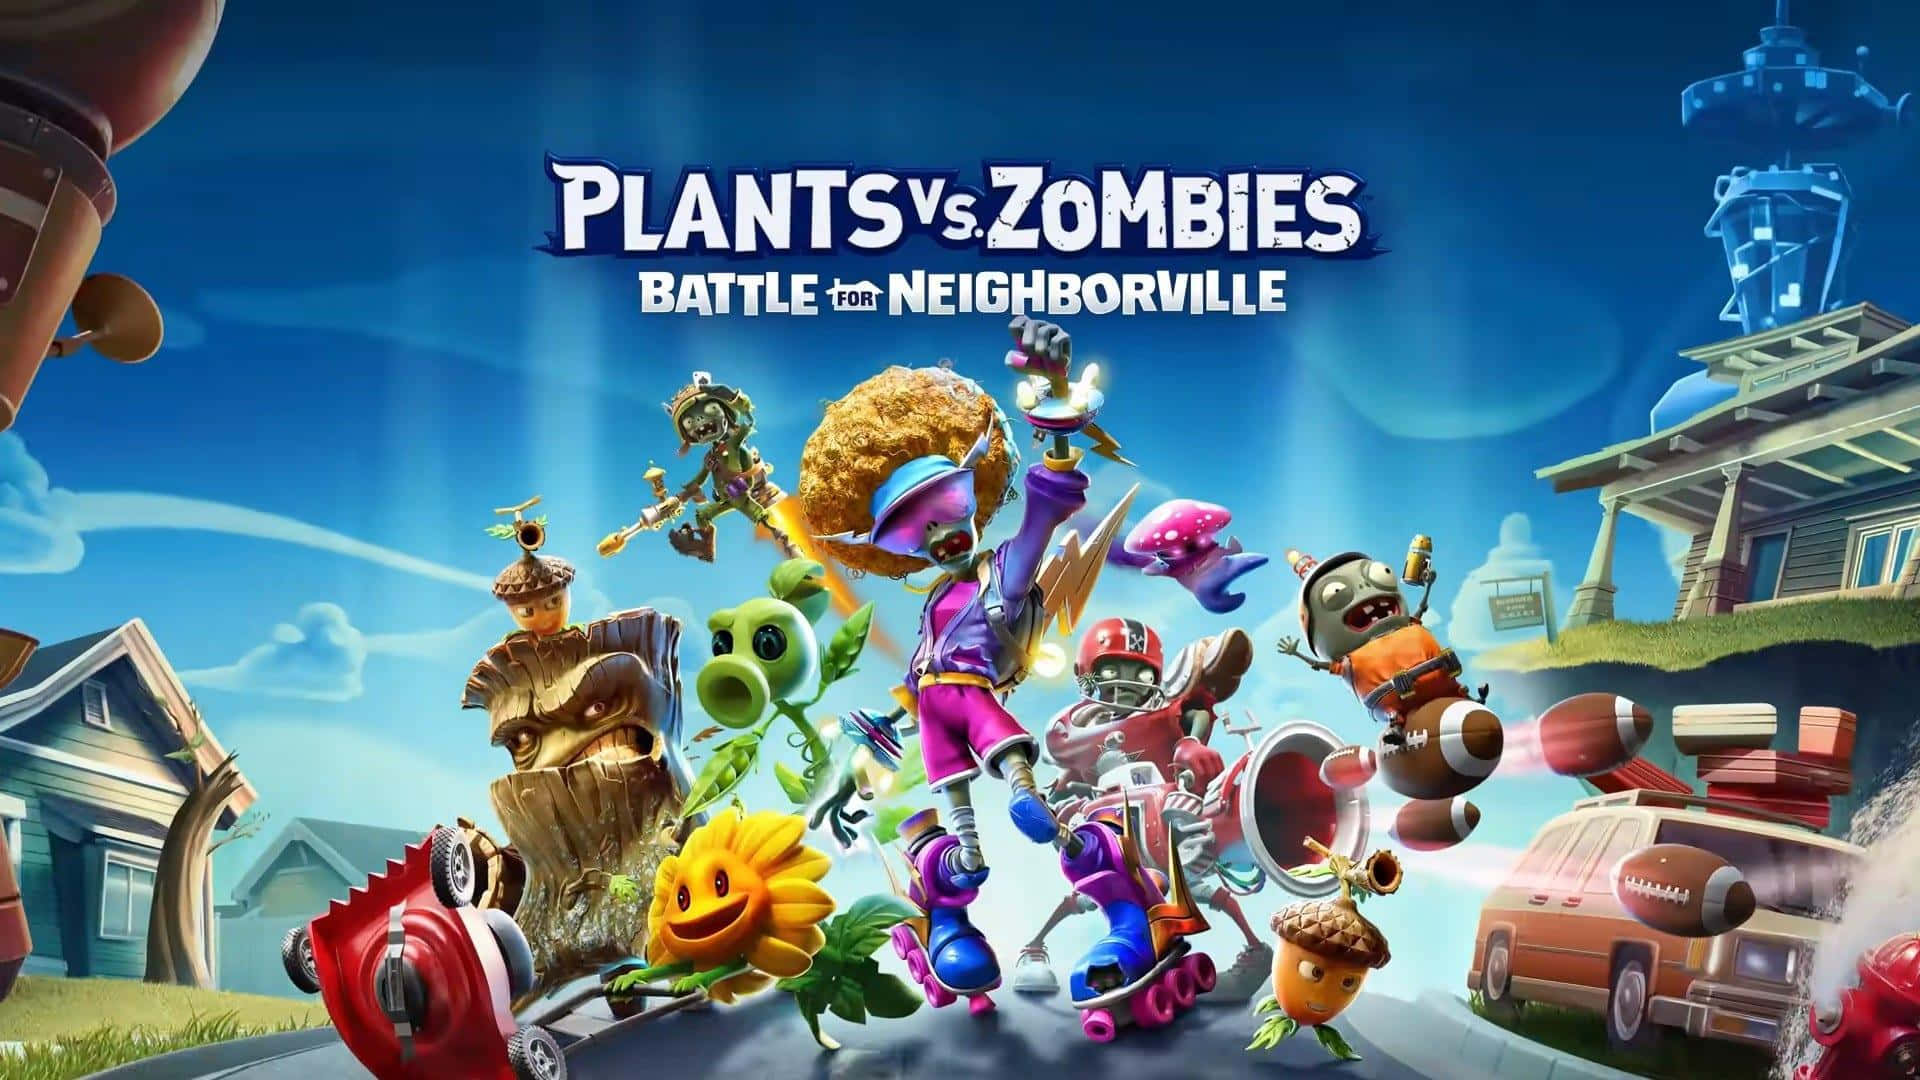 100+] Plants Vs Zombies Backgrounds